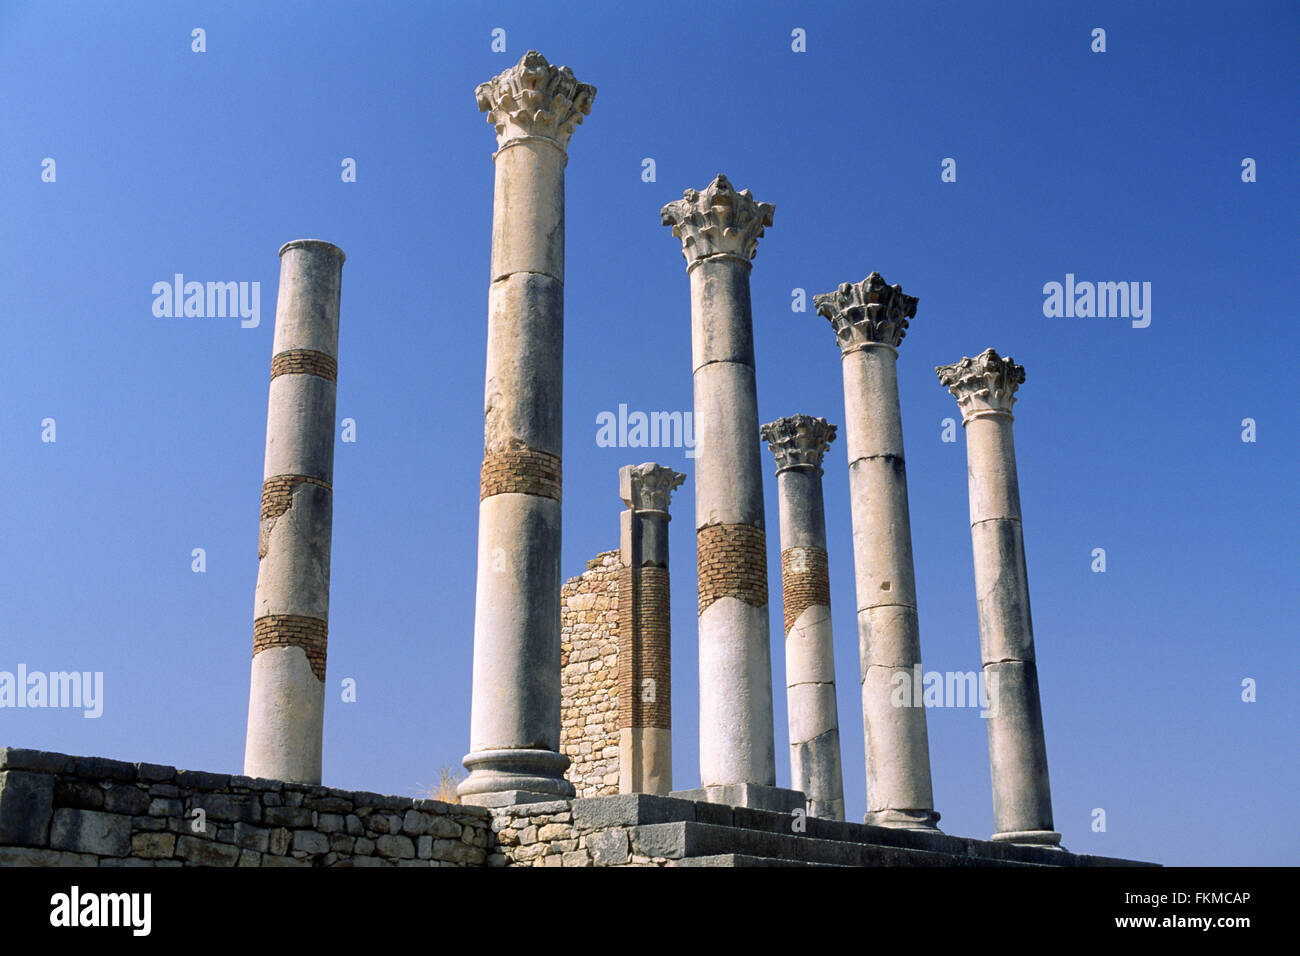 Morocco, Volubilis, ancient roman city, capitoline temple columns Stock Photo